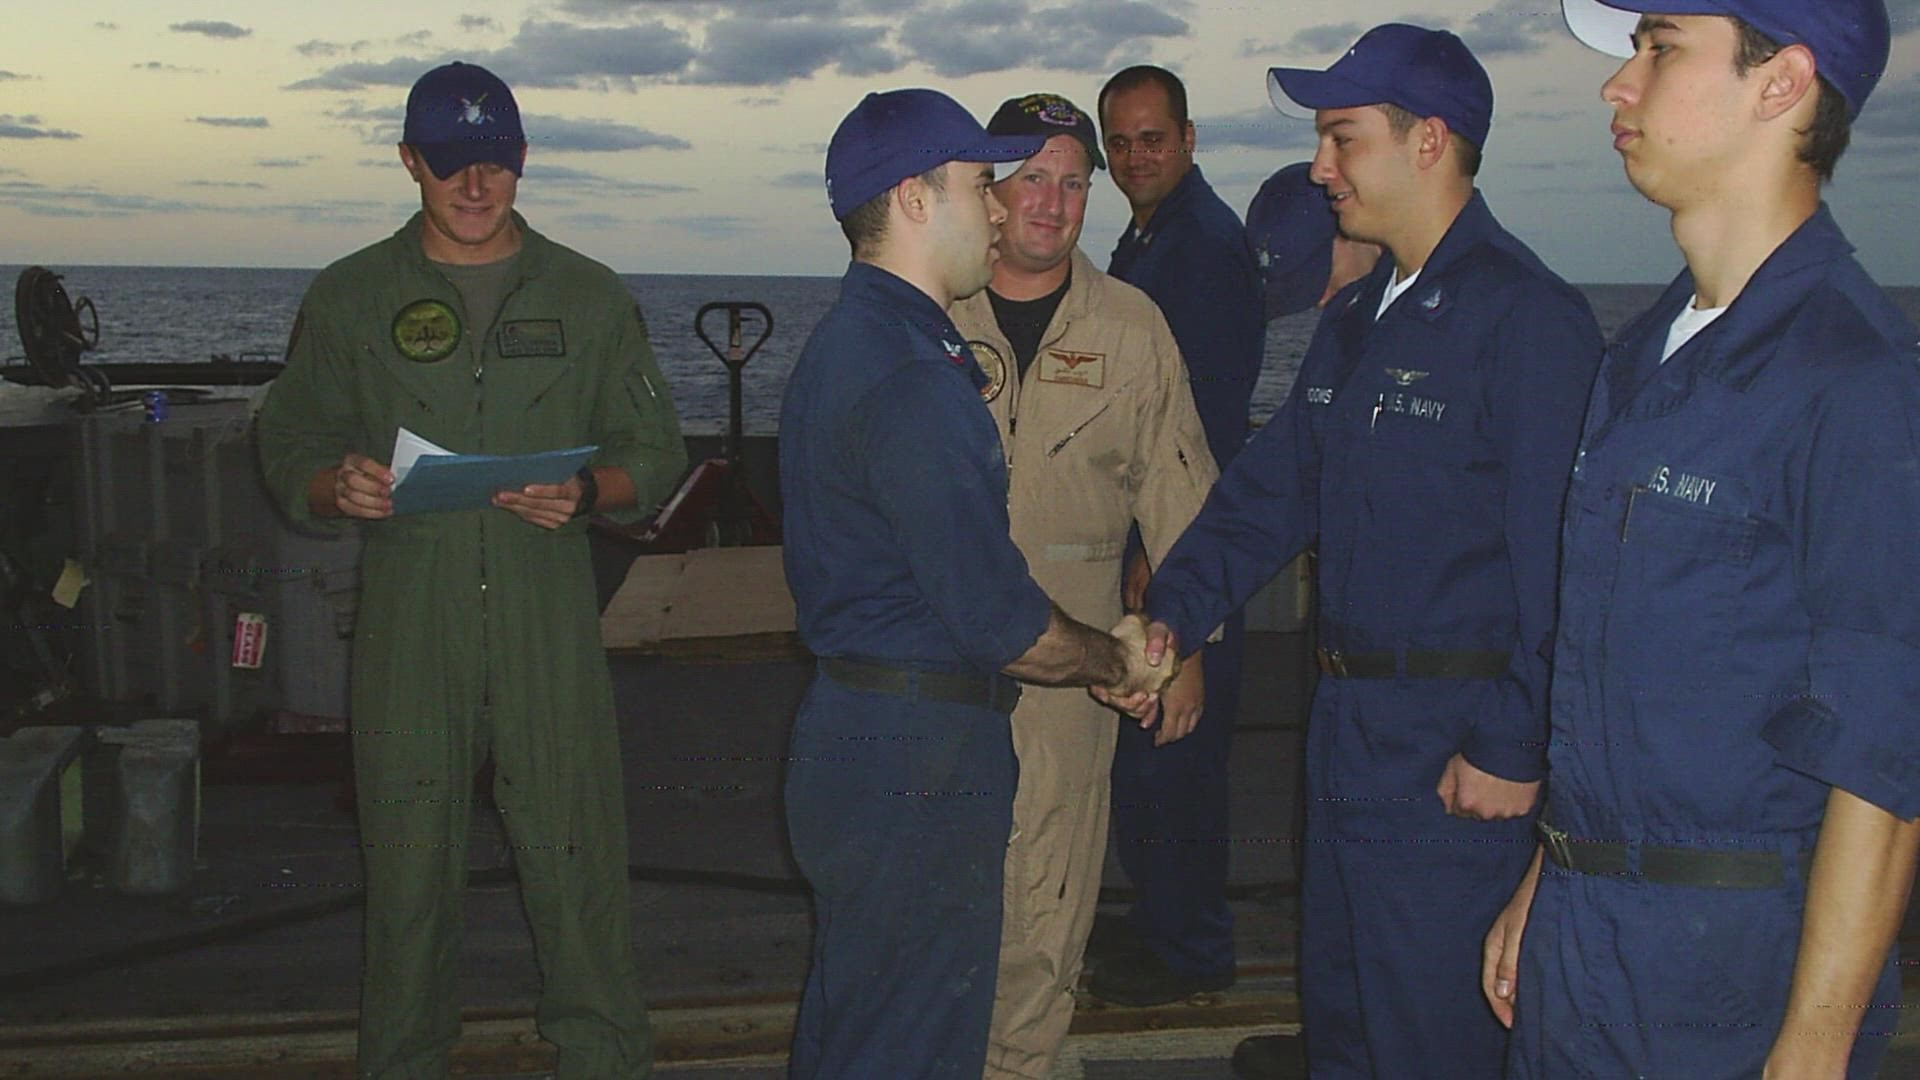 Robby Grooms is a Navy veteran who found himself through the program Battlefields 2 Ballfields.